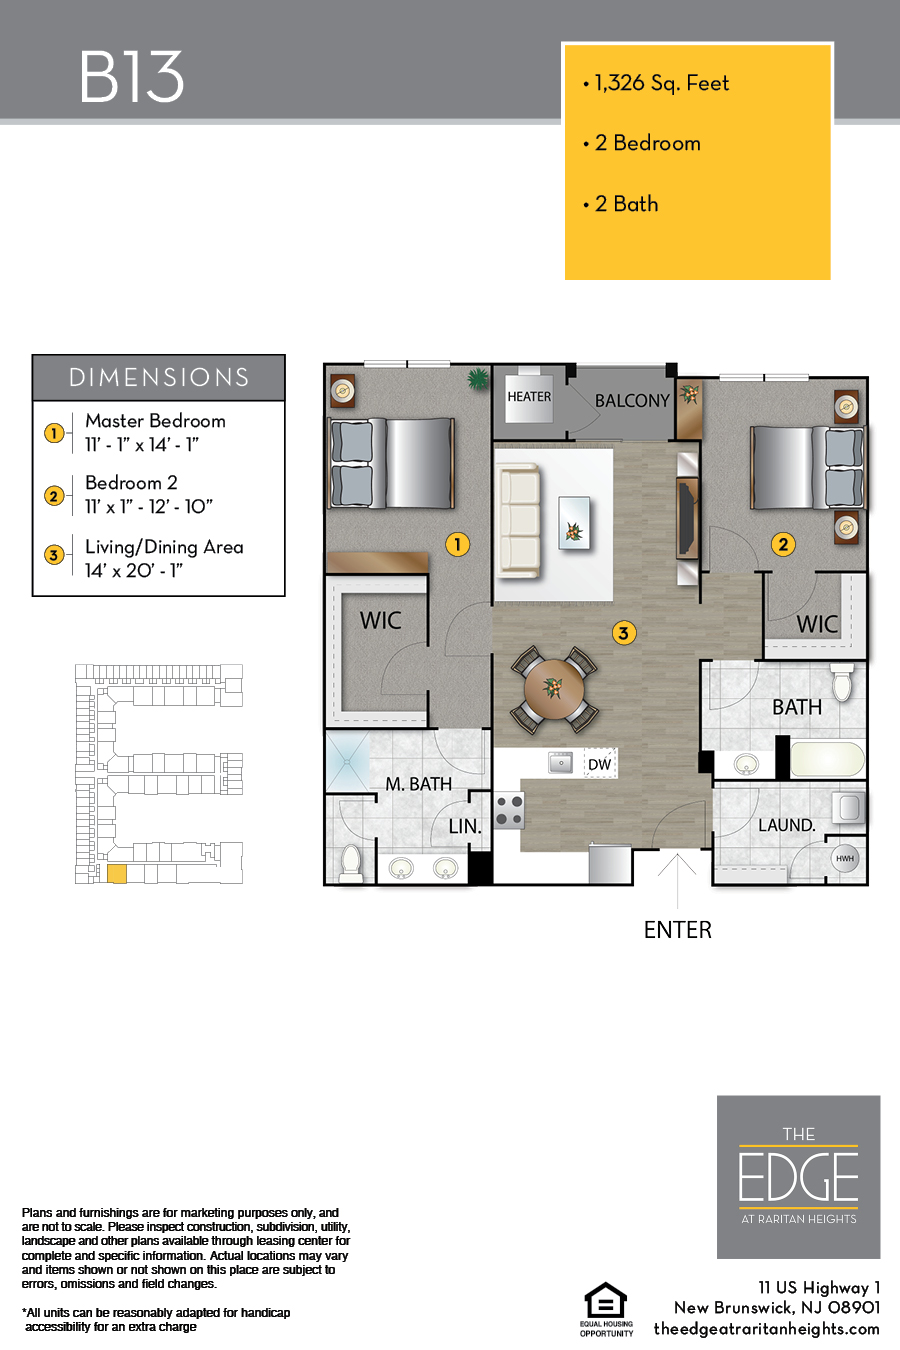 The Edge At Raritan Heights Apartment Floor Plan B13